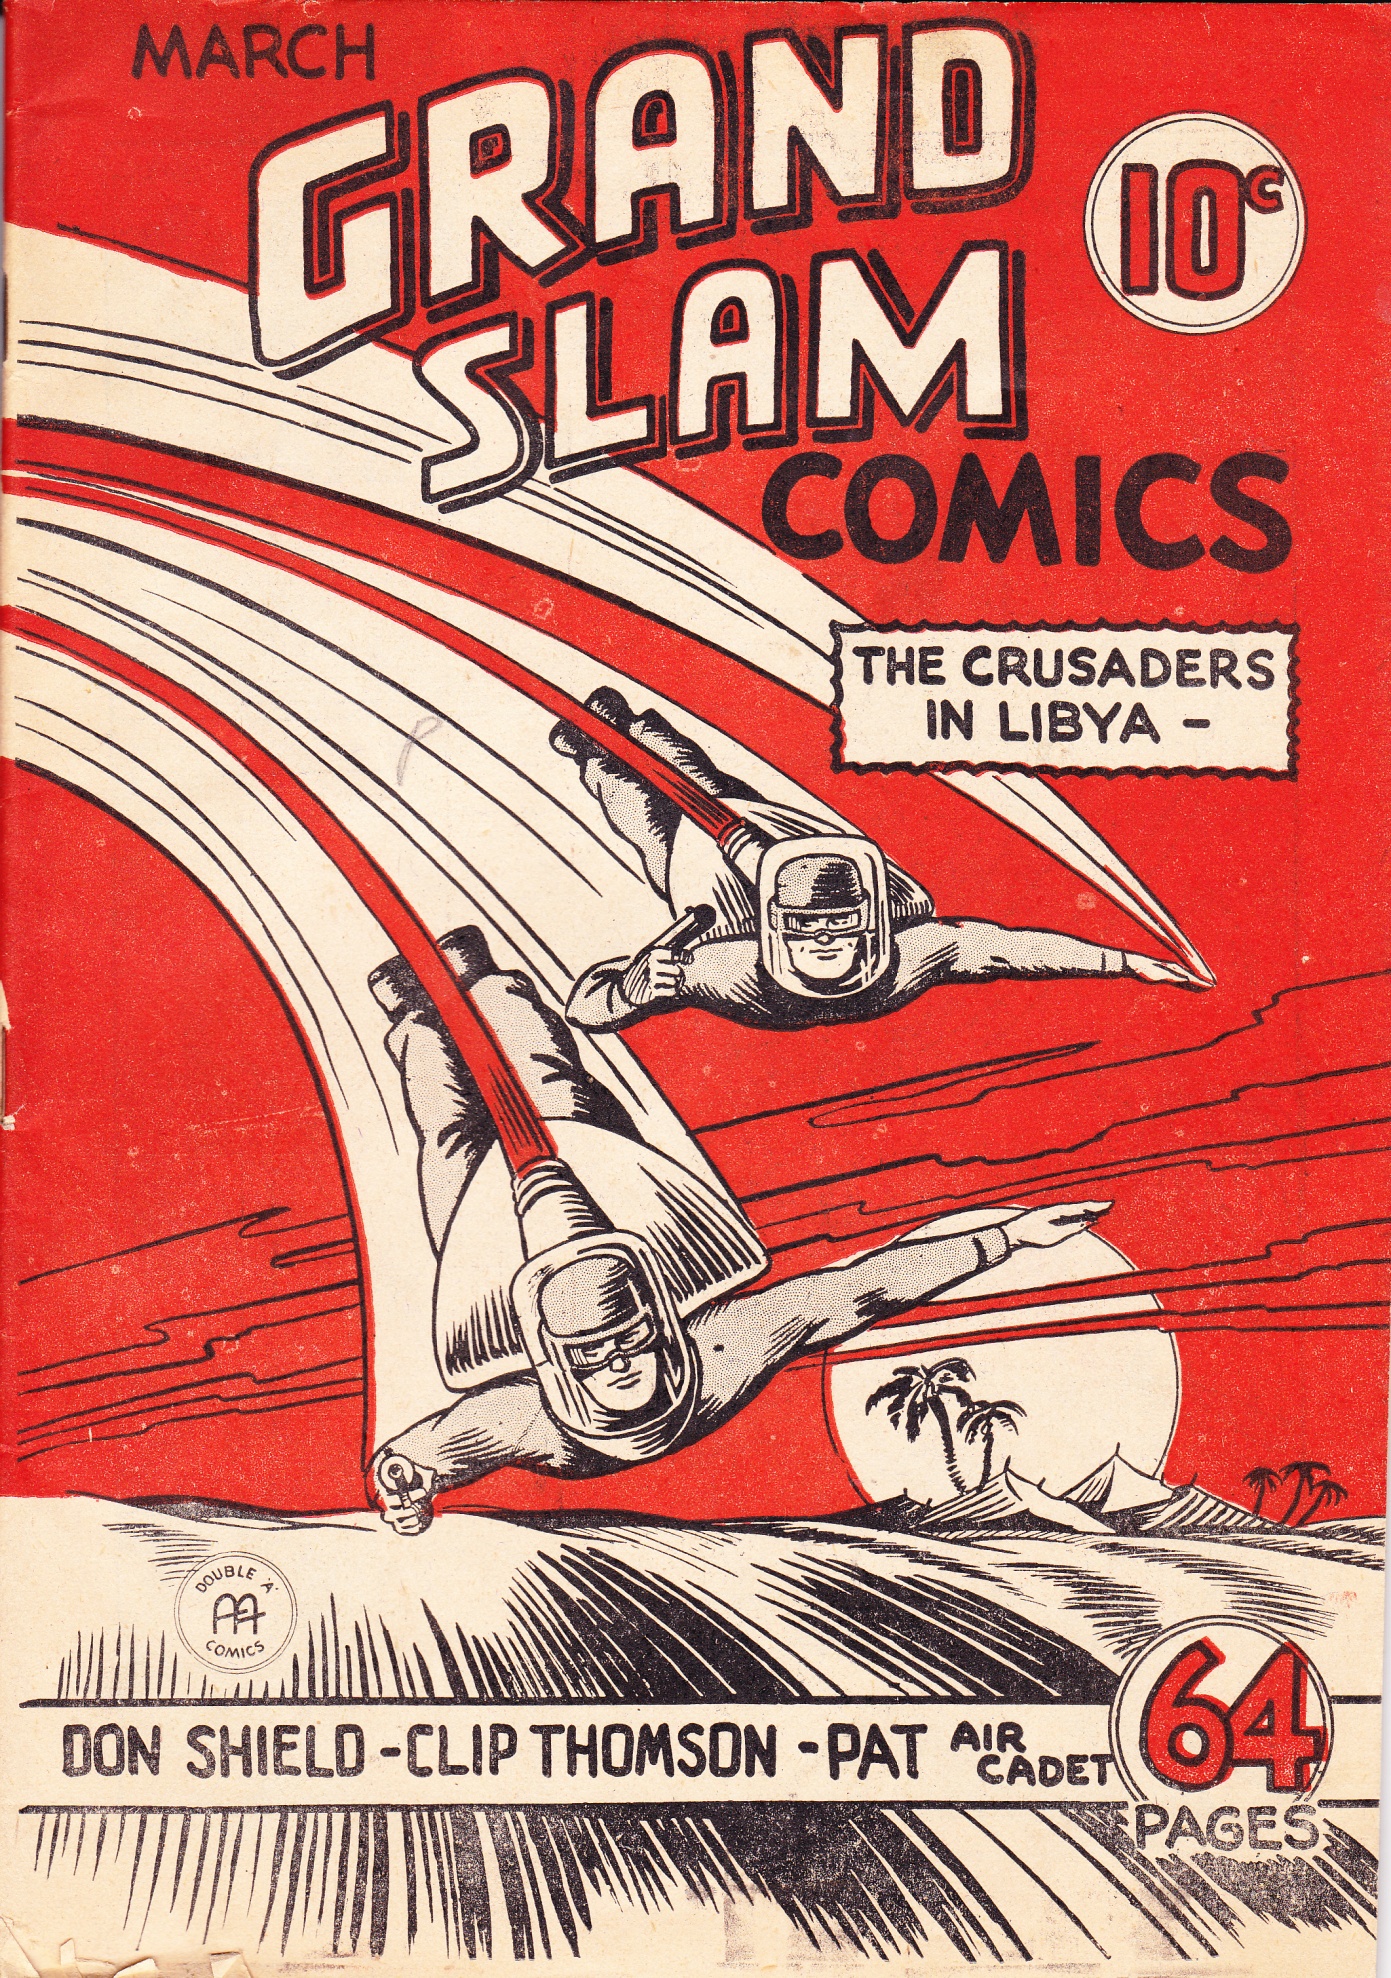 C:\Users\Robert\Documents\CARTOONING ILLUSTRATION ANIMATION\IMAGE CARTOON\IMAGE CARTOON C\THE CRUSADERS, Grand Slam Comics, 1-4, March 1942, fc.jpg